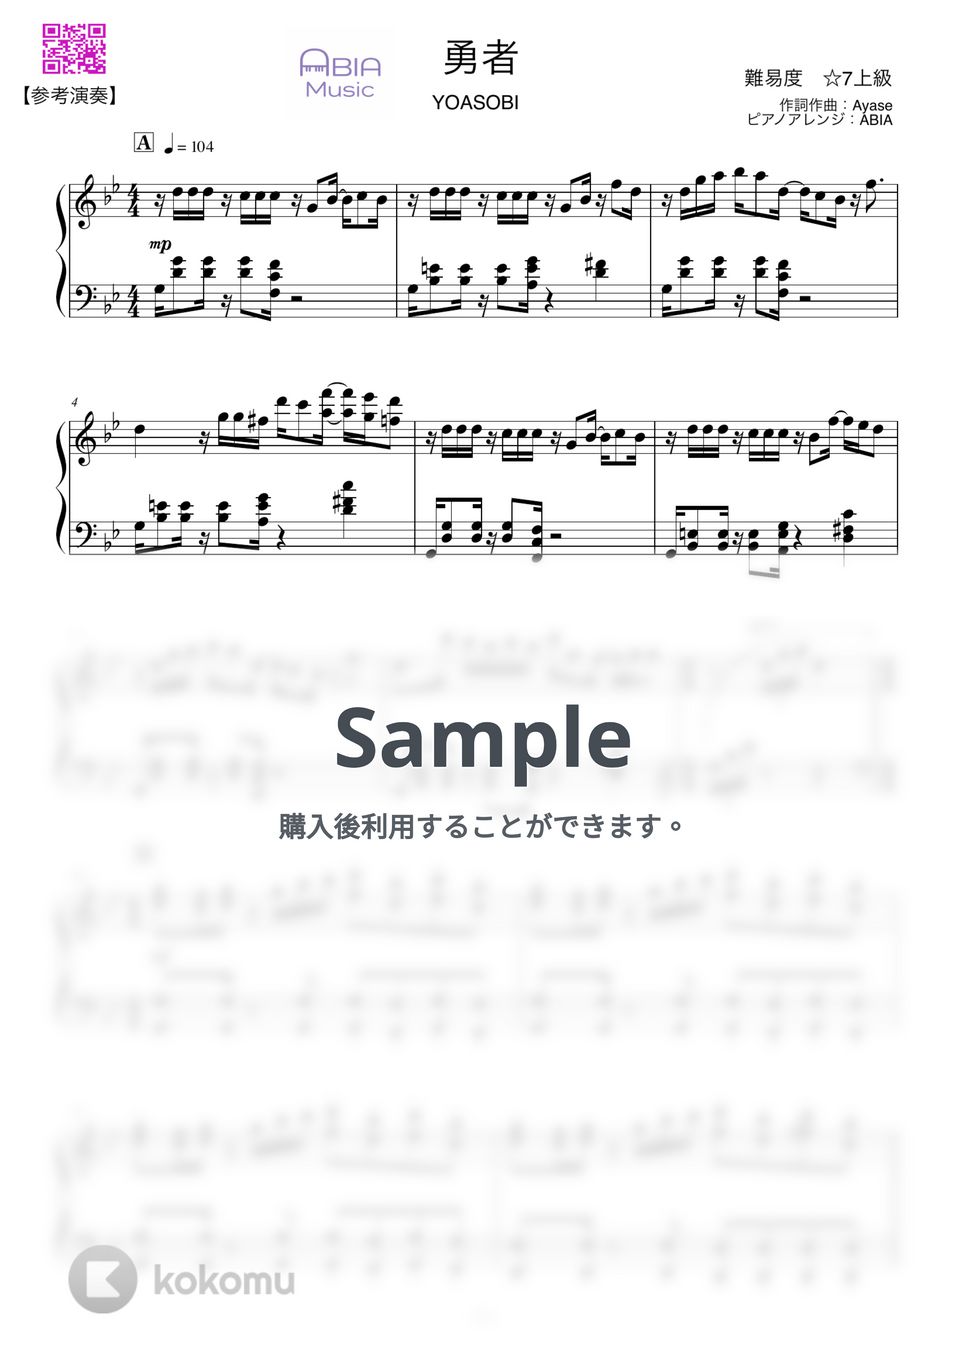 YOASOBI - 勇者 by ABIA Music